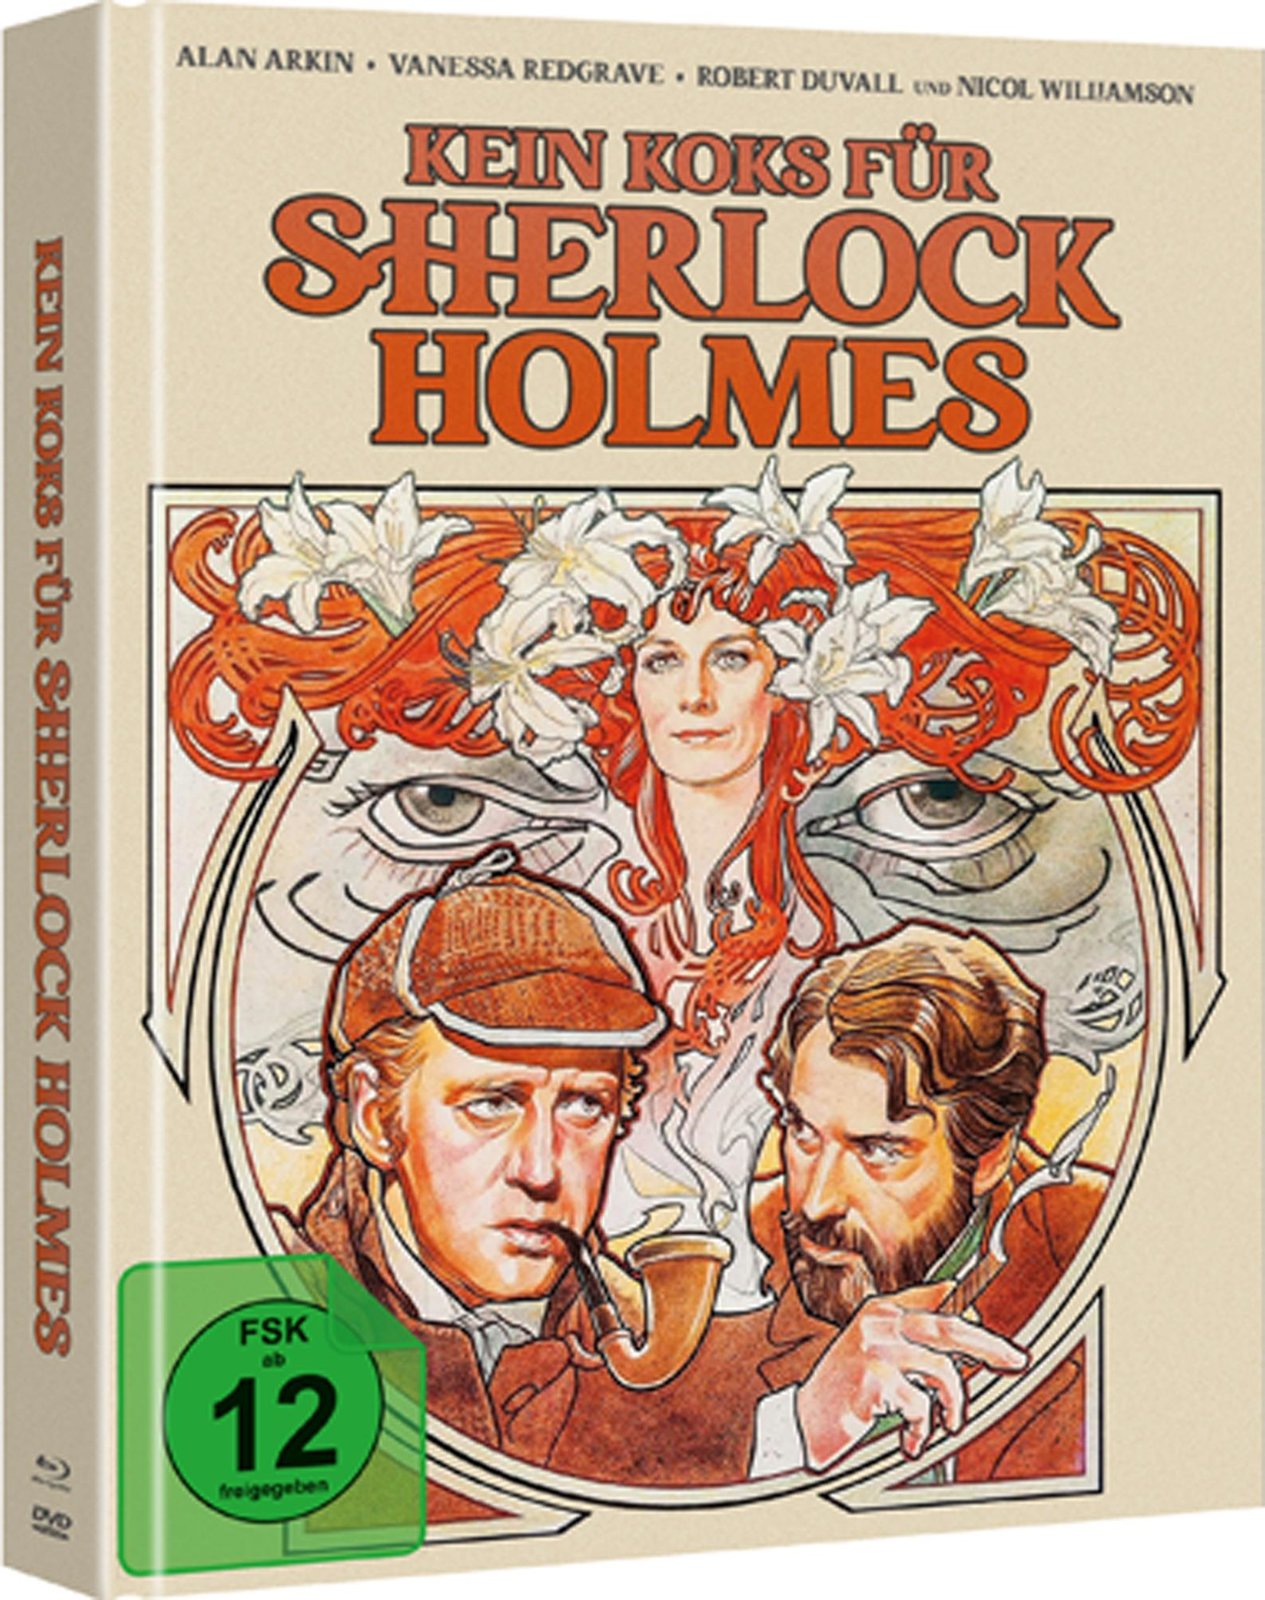 Kein Koks für Sherlock Holmes - Uncut Mediabook Edition  (DVD+blu-ray)